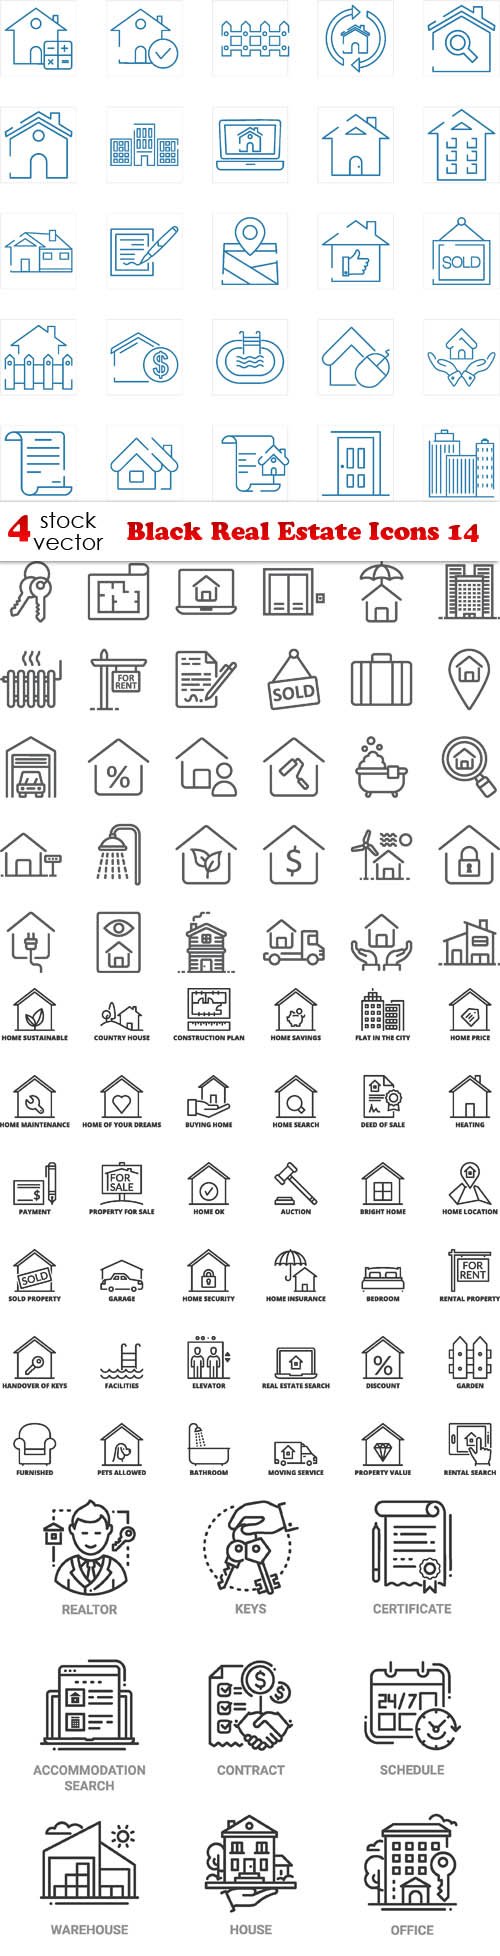 Vectors - Black Real Estate Icons 14